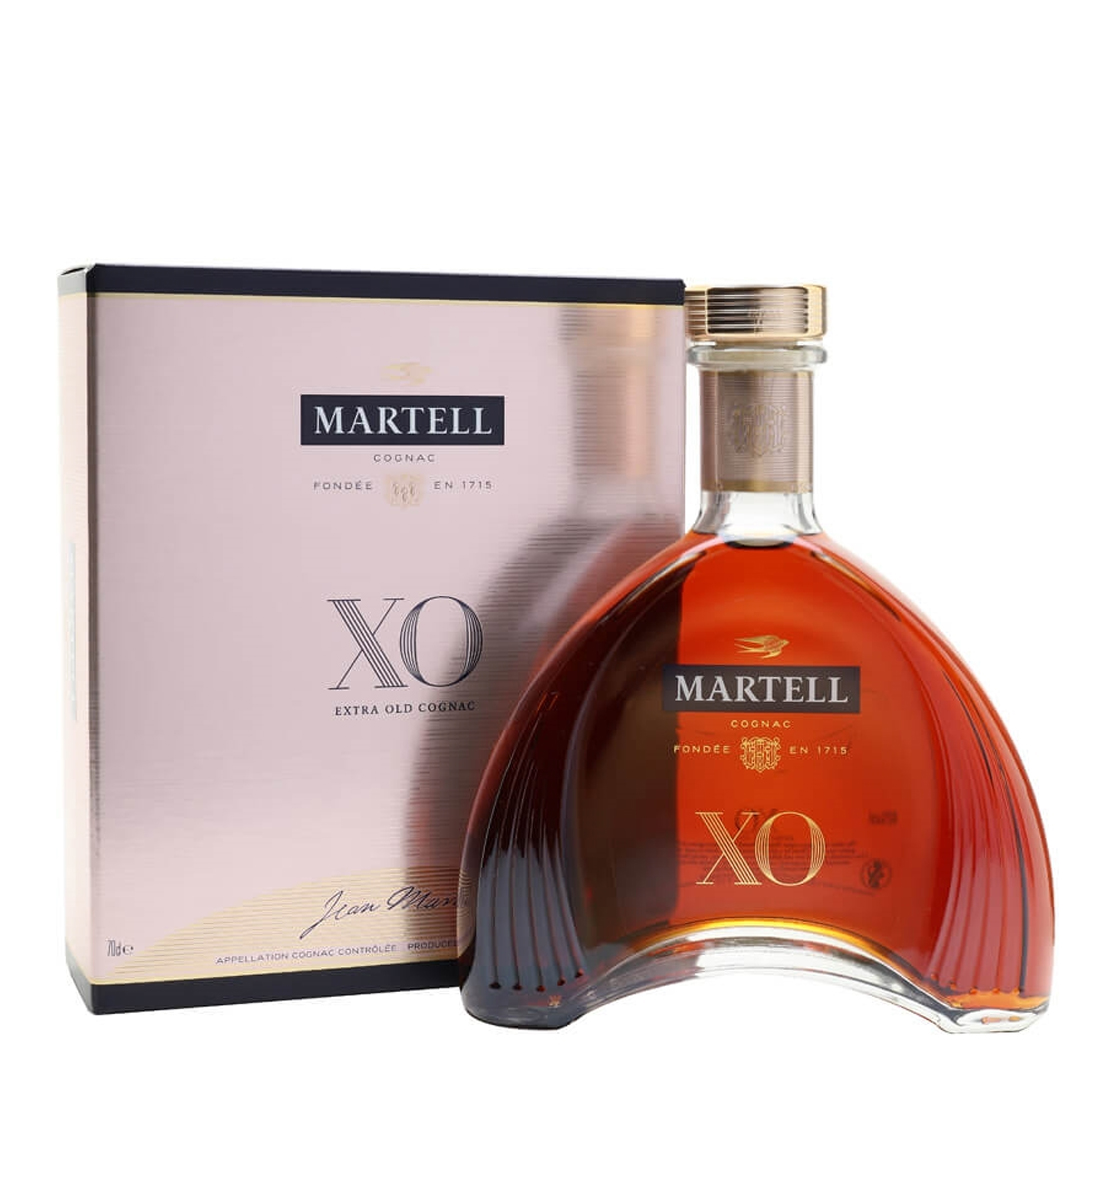 Martell Cognac XO 0.7L 0.7L